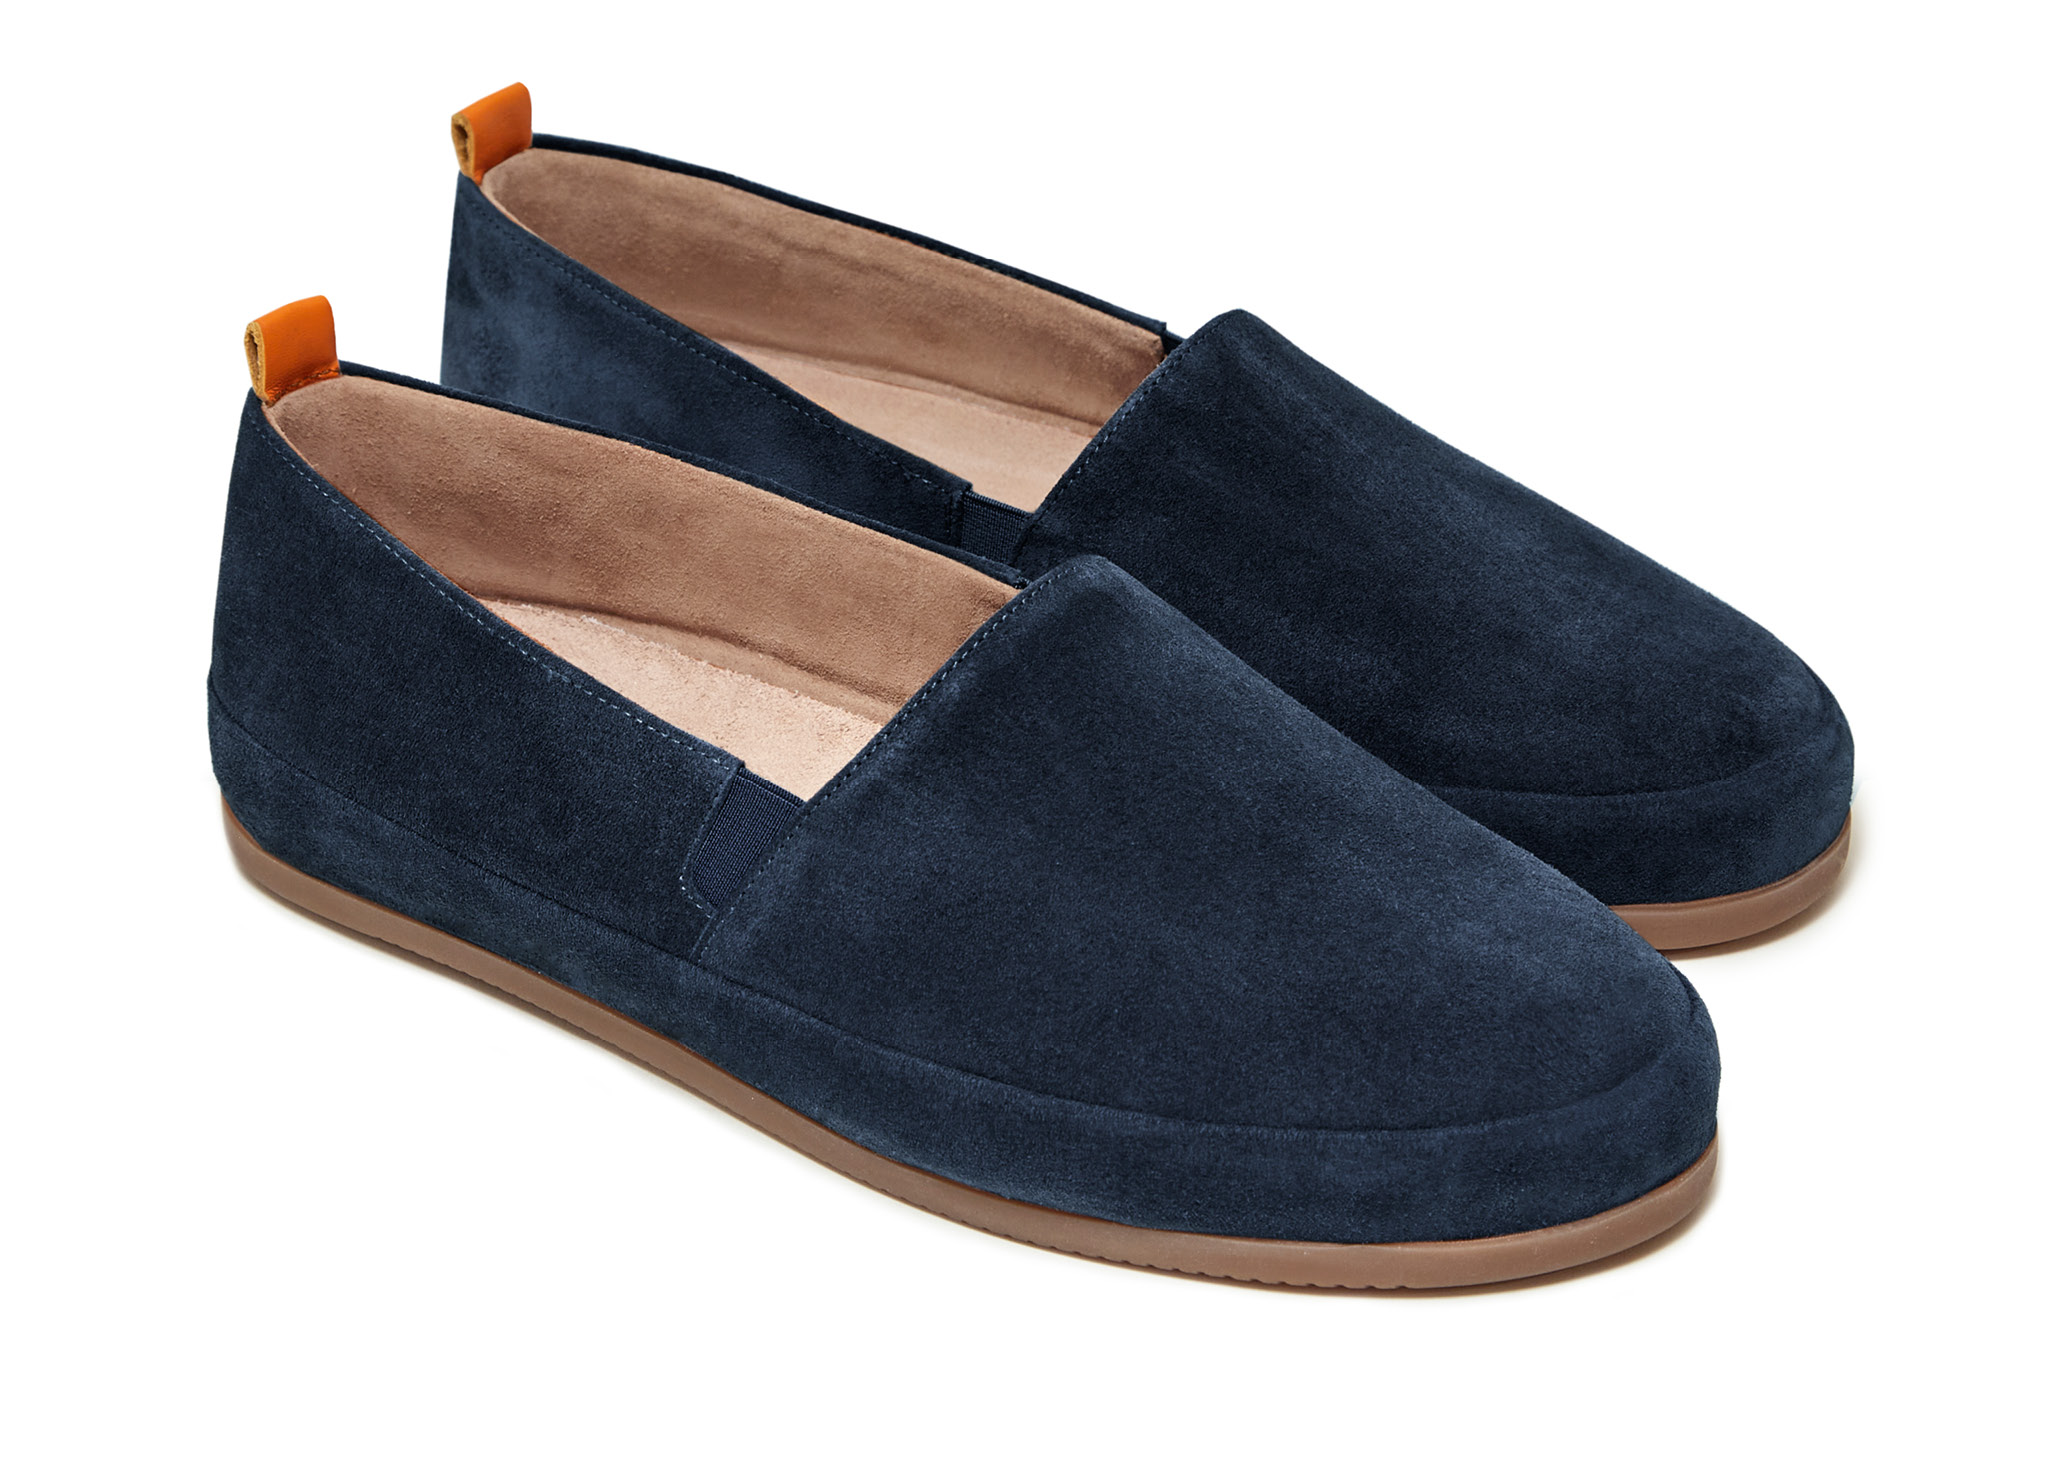 shuttle Kakadu Bygger Navy Loafer for Men | MULO shoes | Luxurious Italian Suede Leather